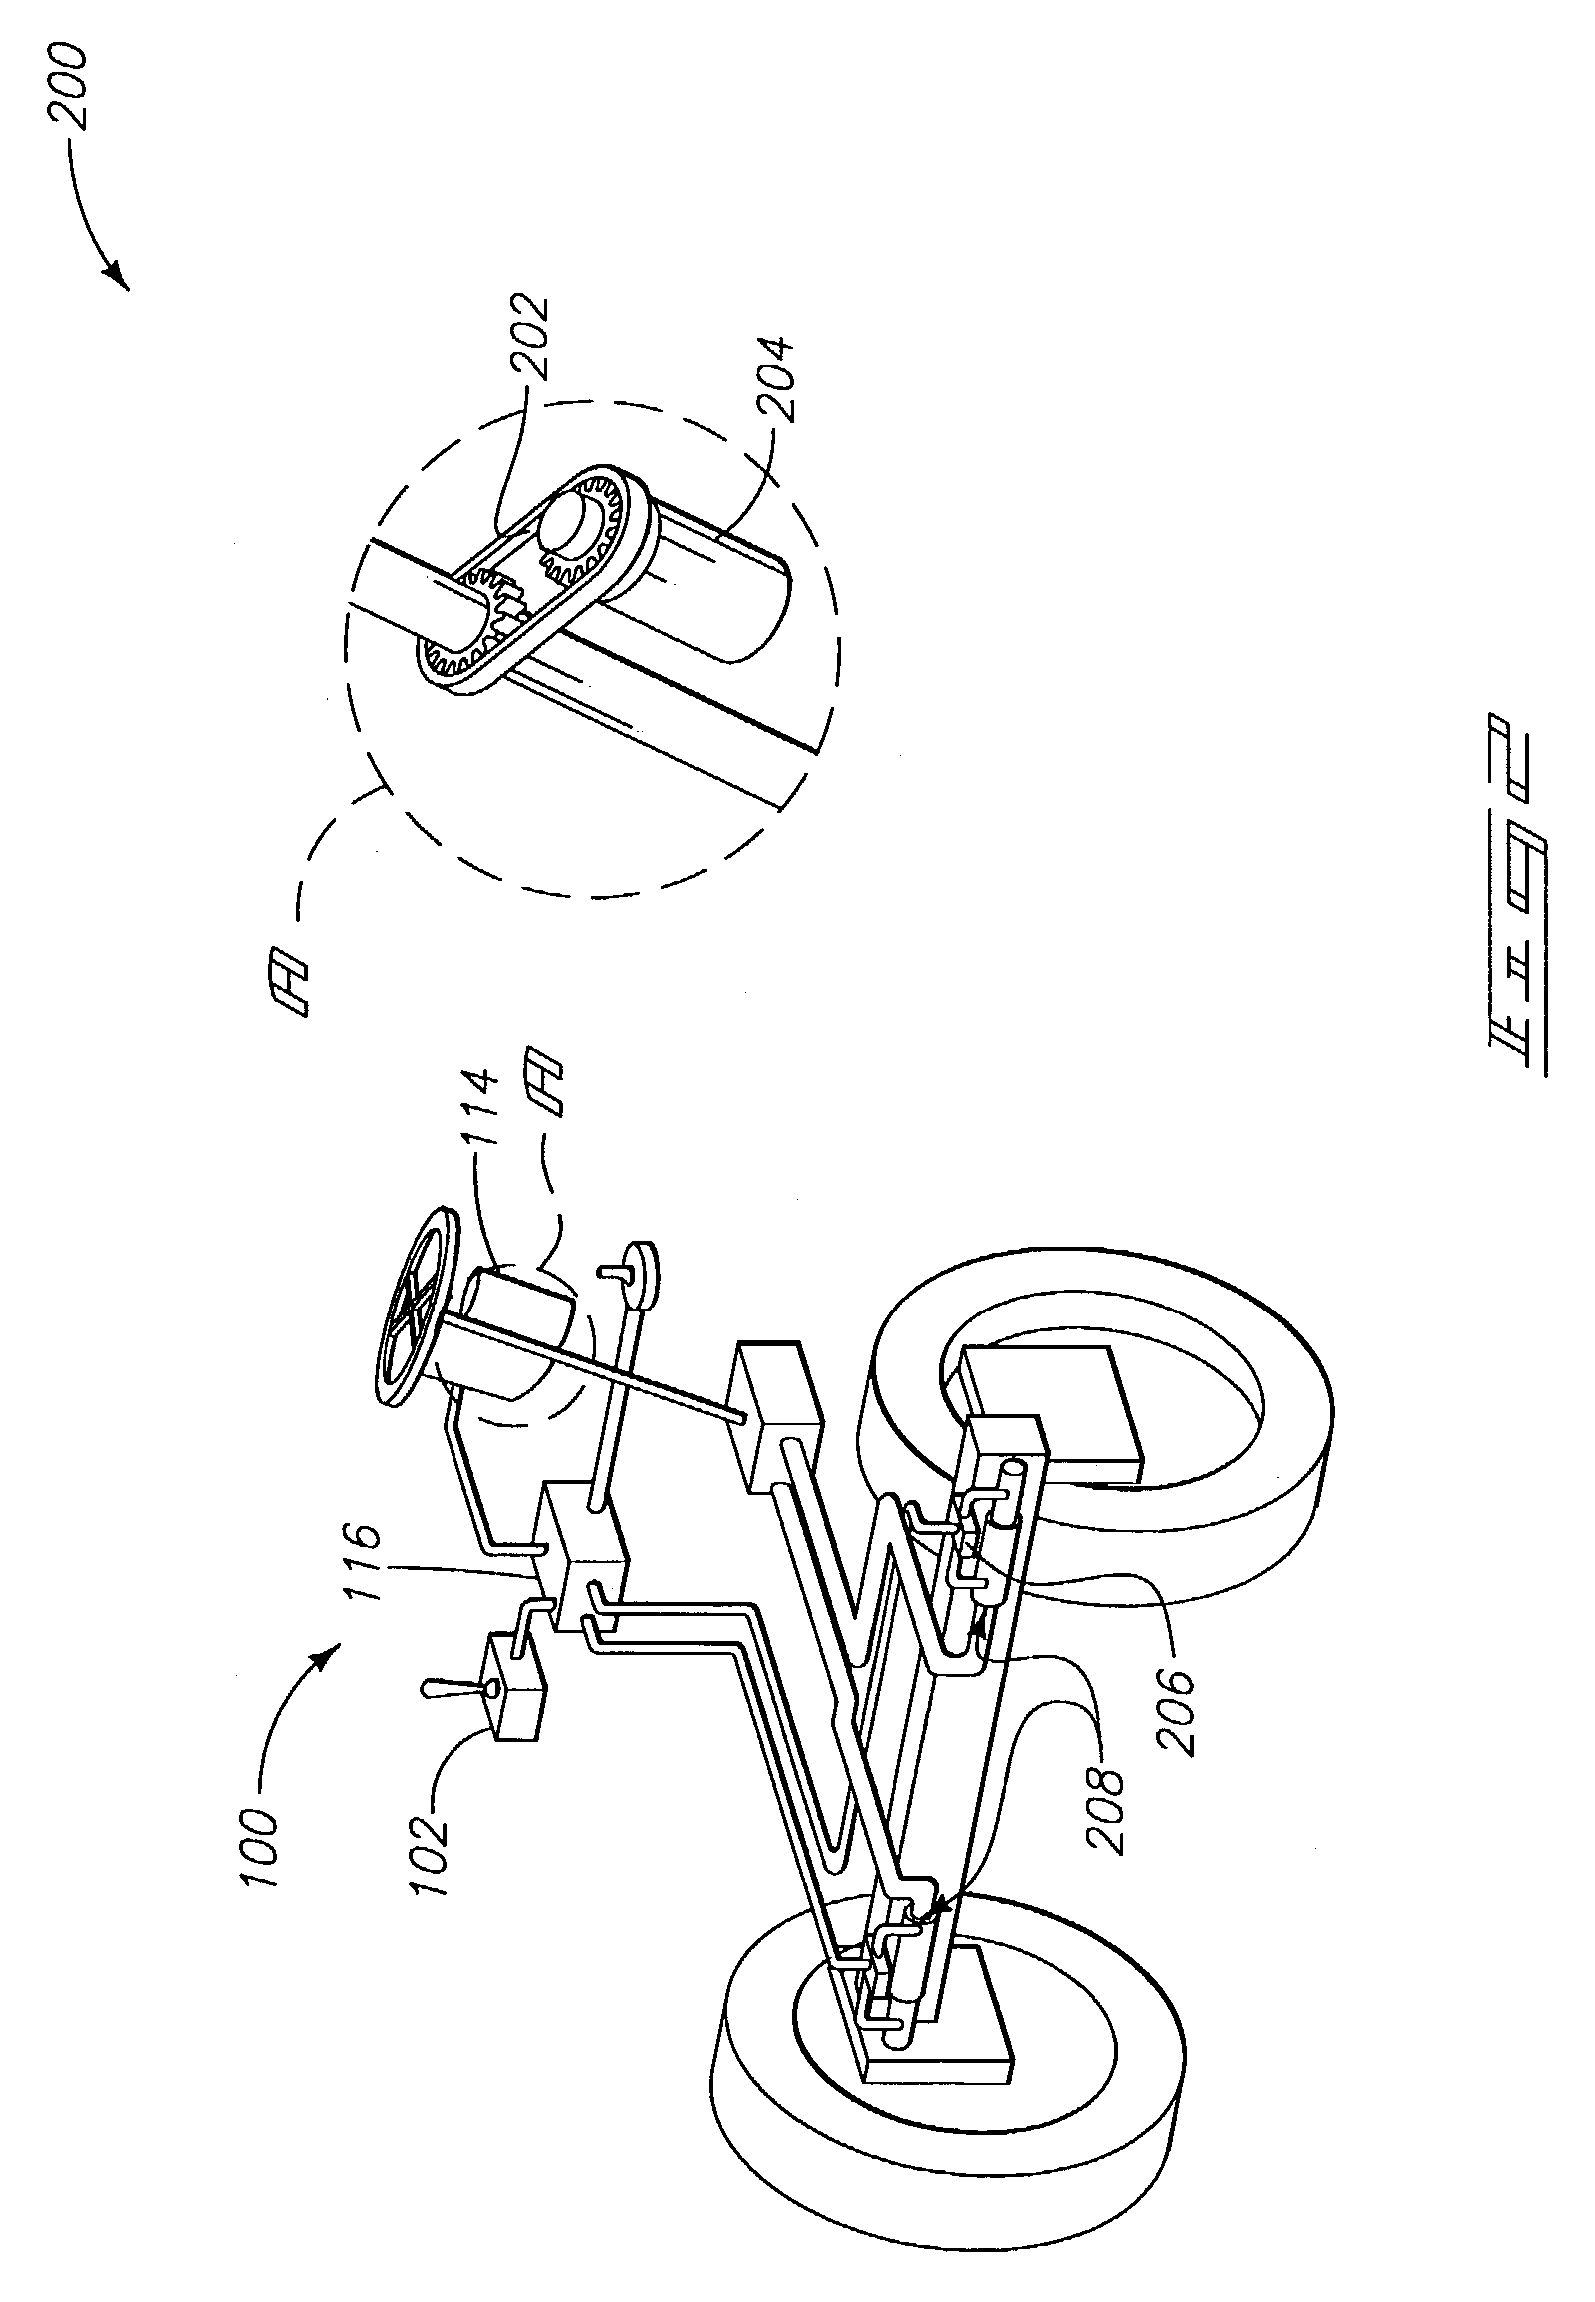 Auto-steering apparatus and method